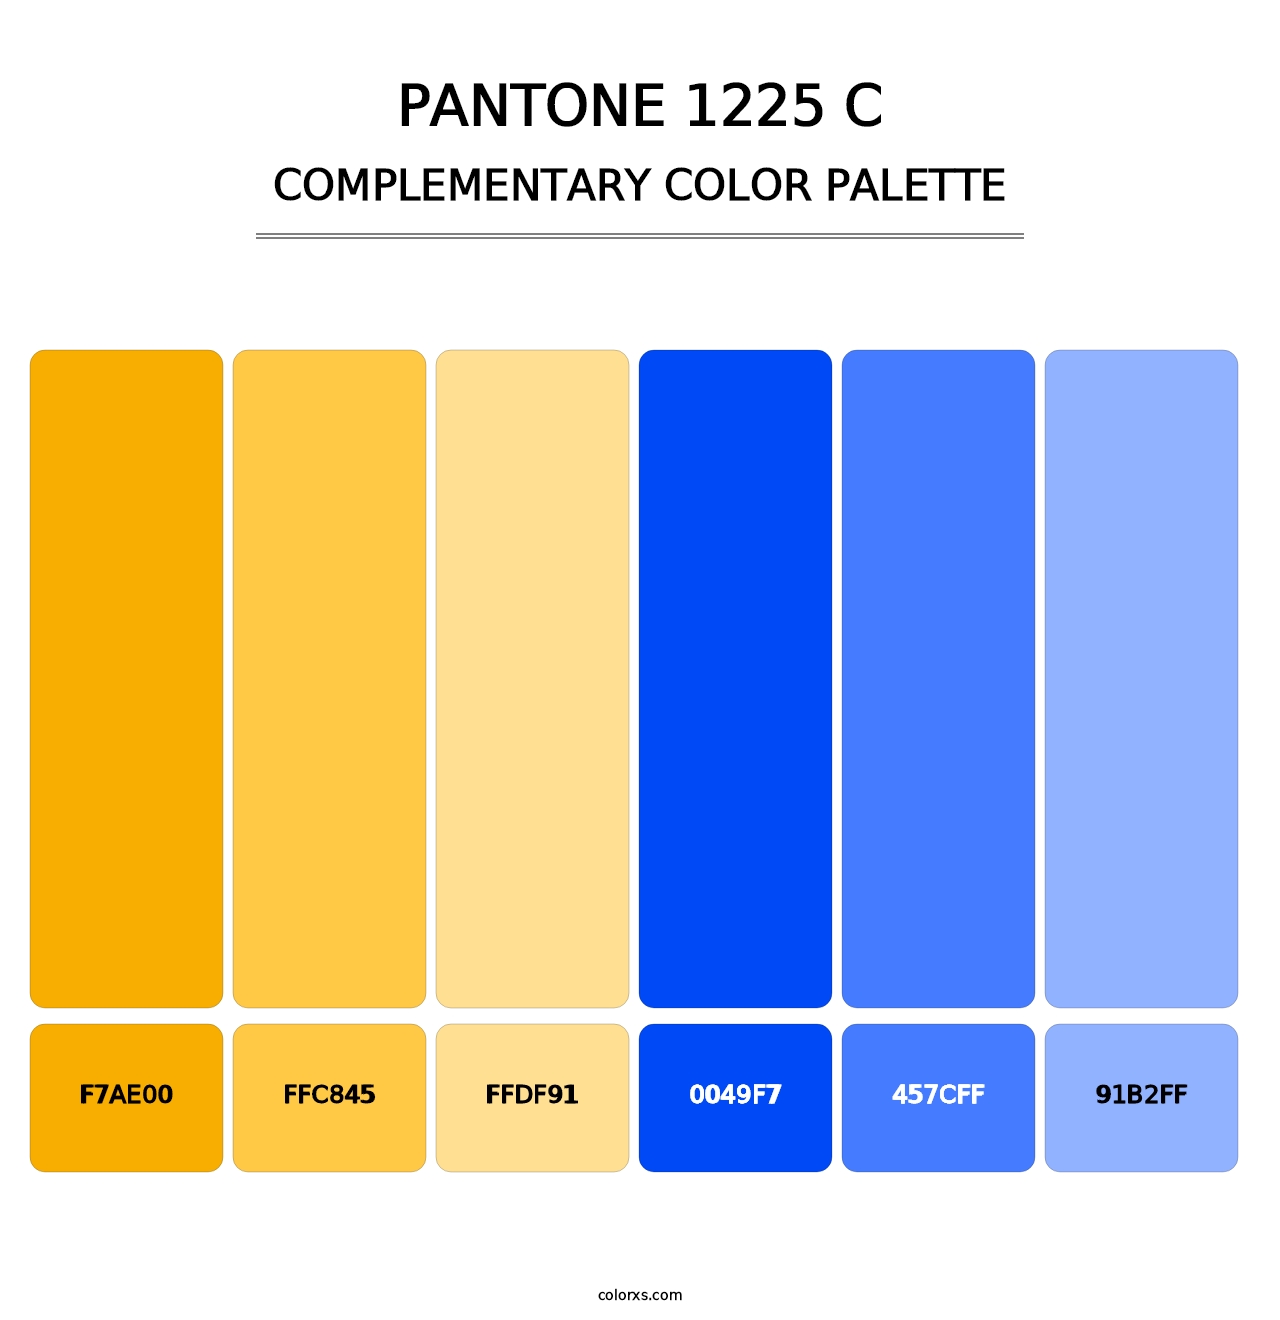 PANTONE 1225 C - Complementary Color Palette